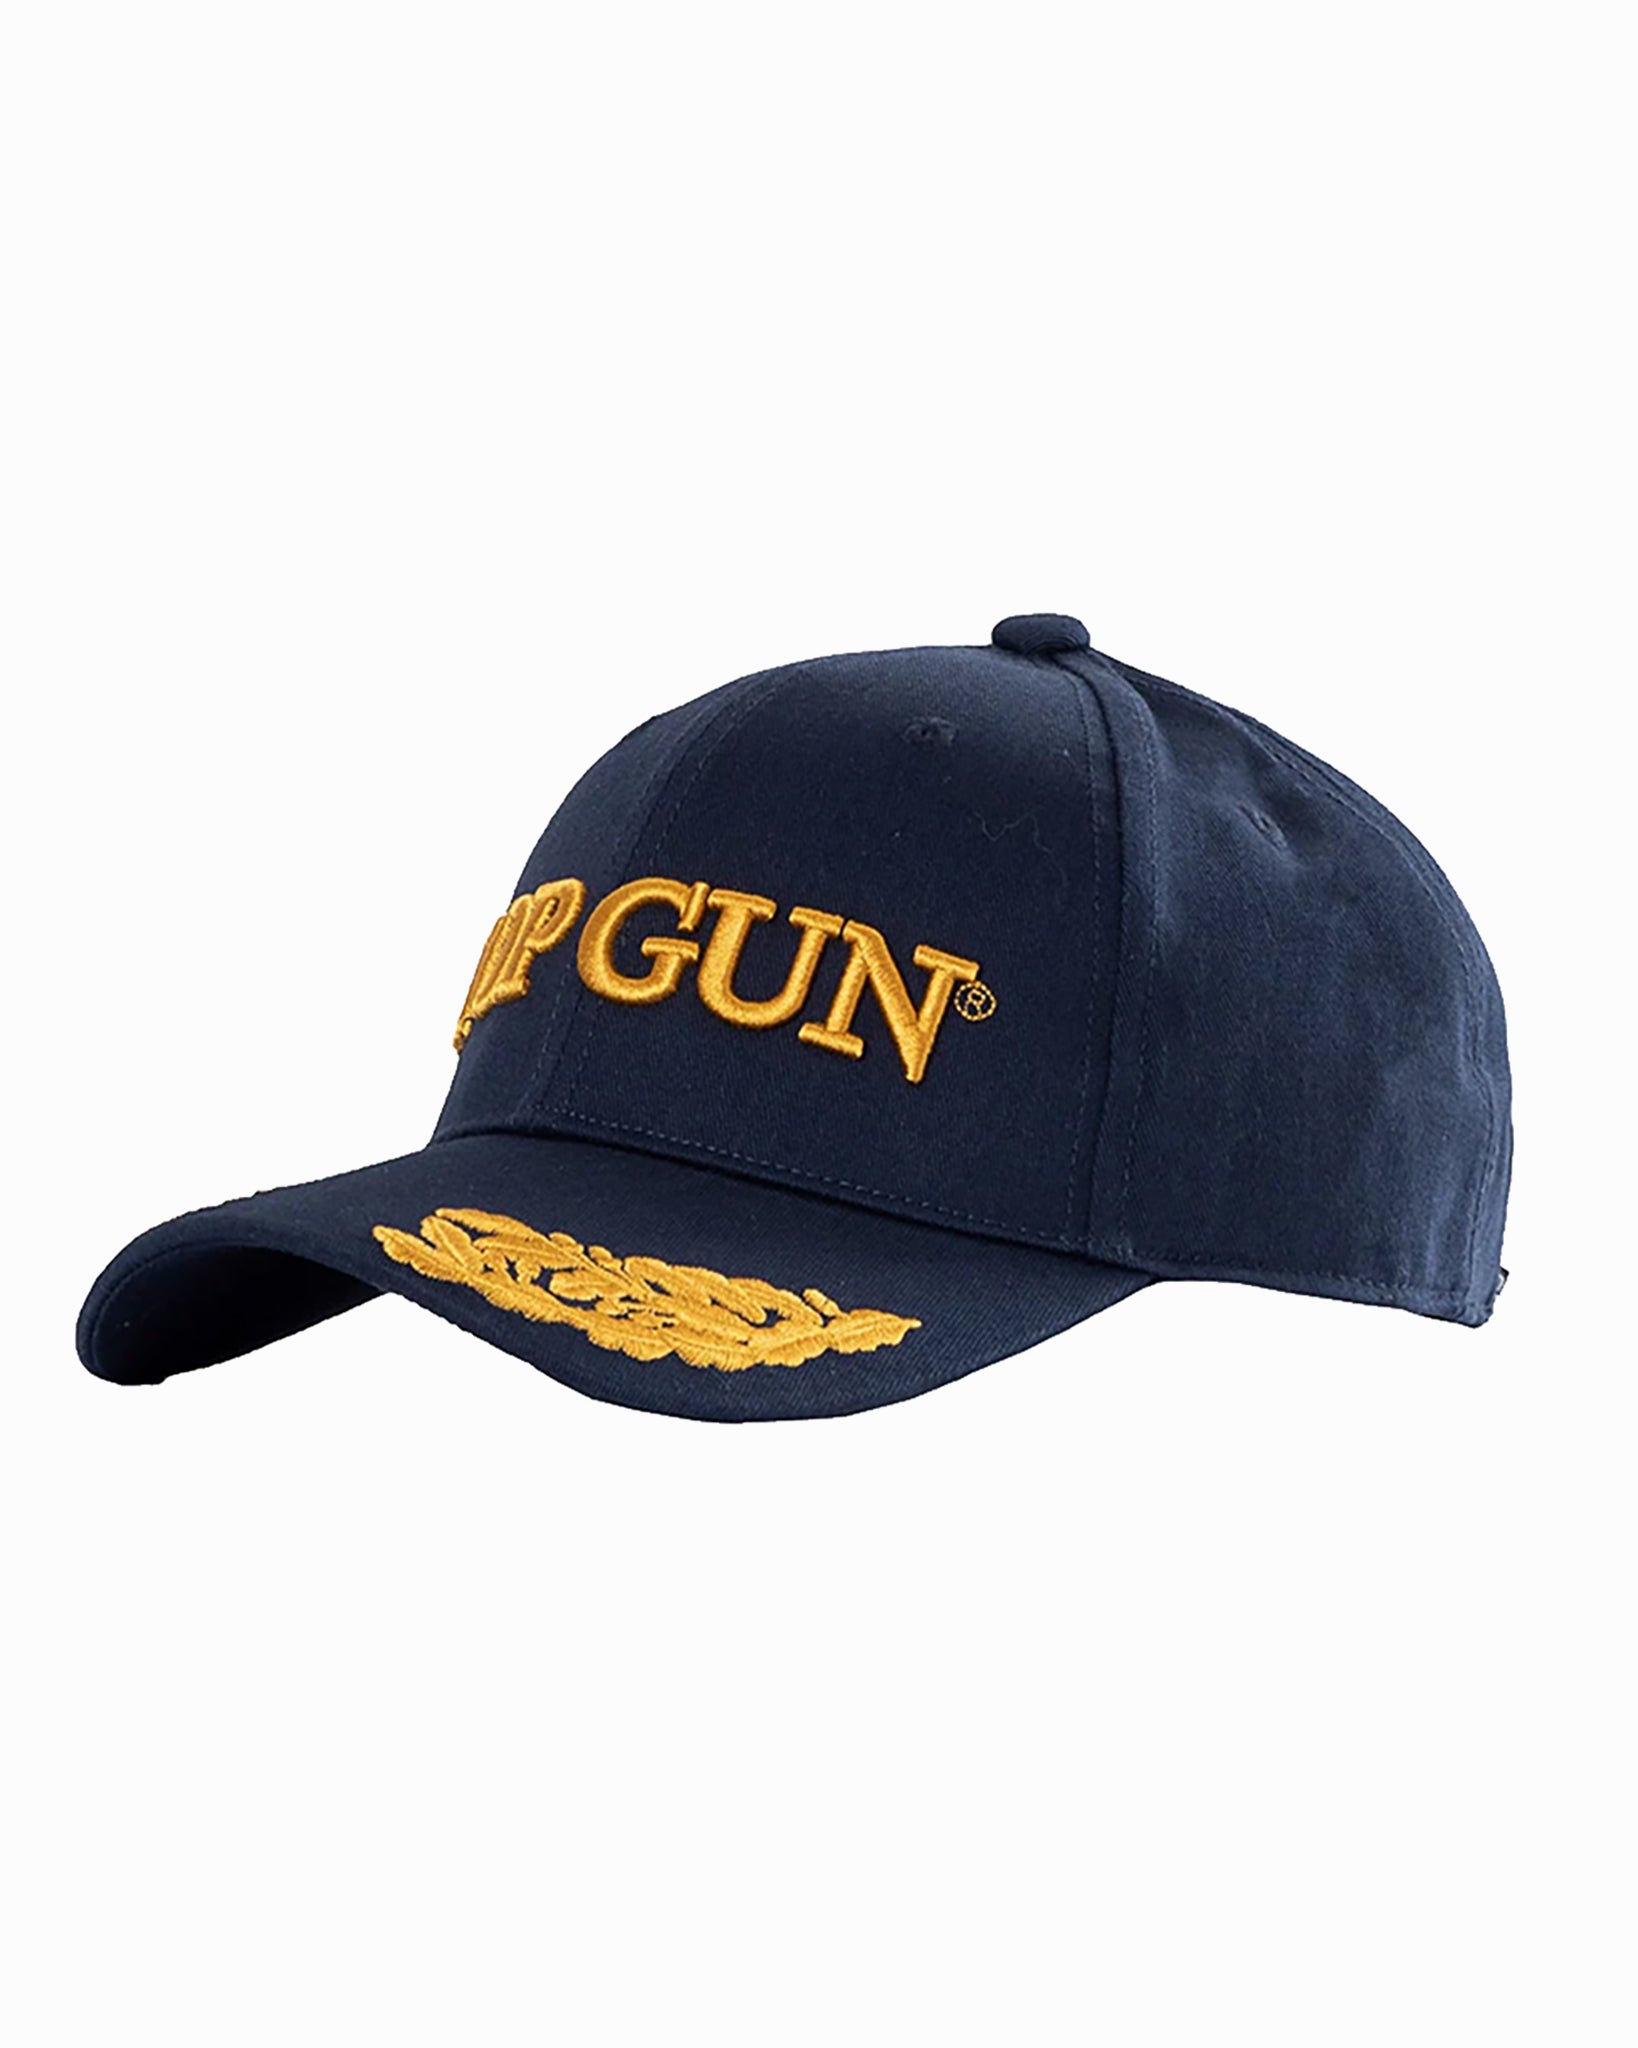 Top Gun: Hat, Beanie, More Trucker Gun Store Caps | | – Official Cap, Top Maverick Store and